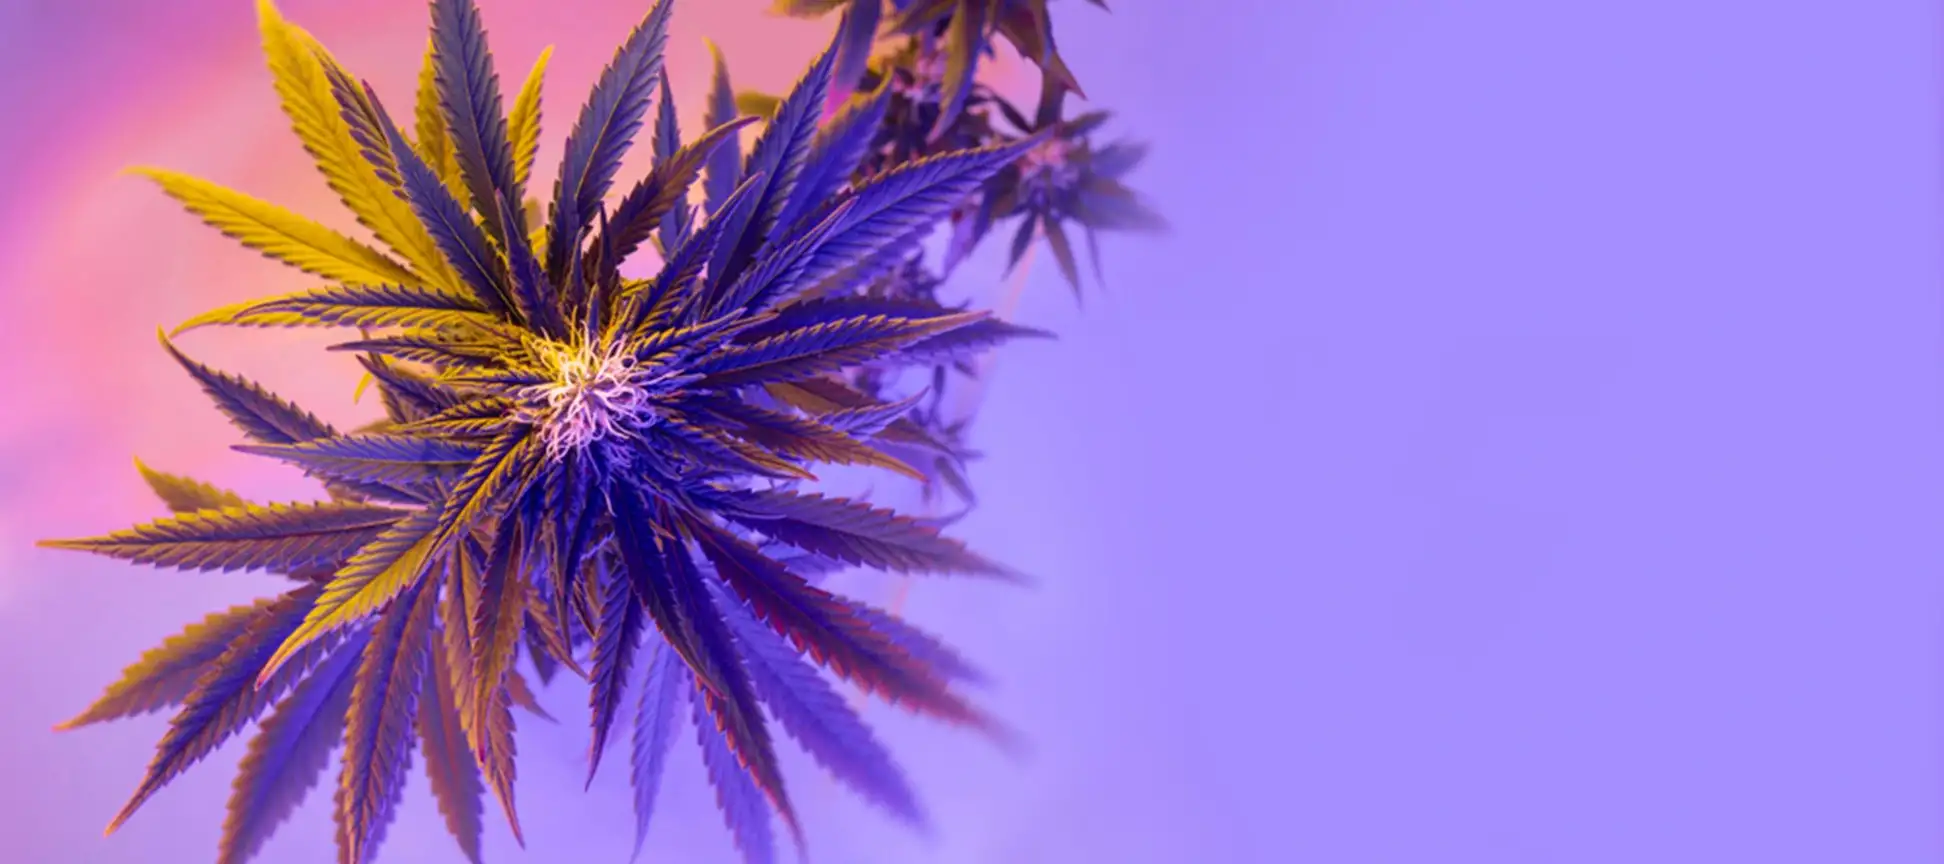 cannabis flowers